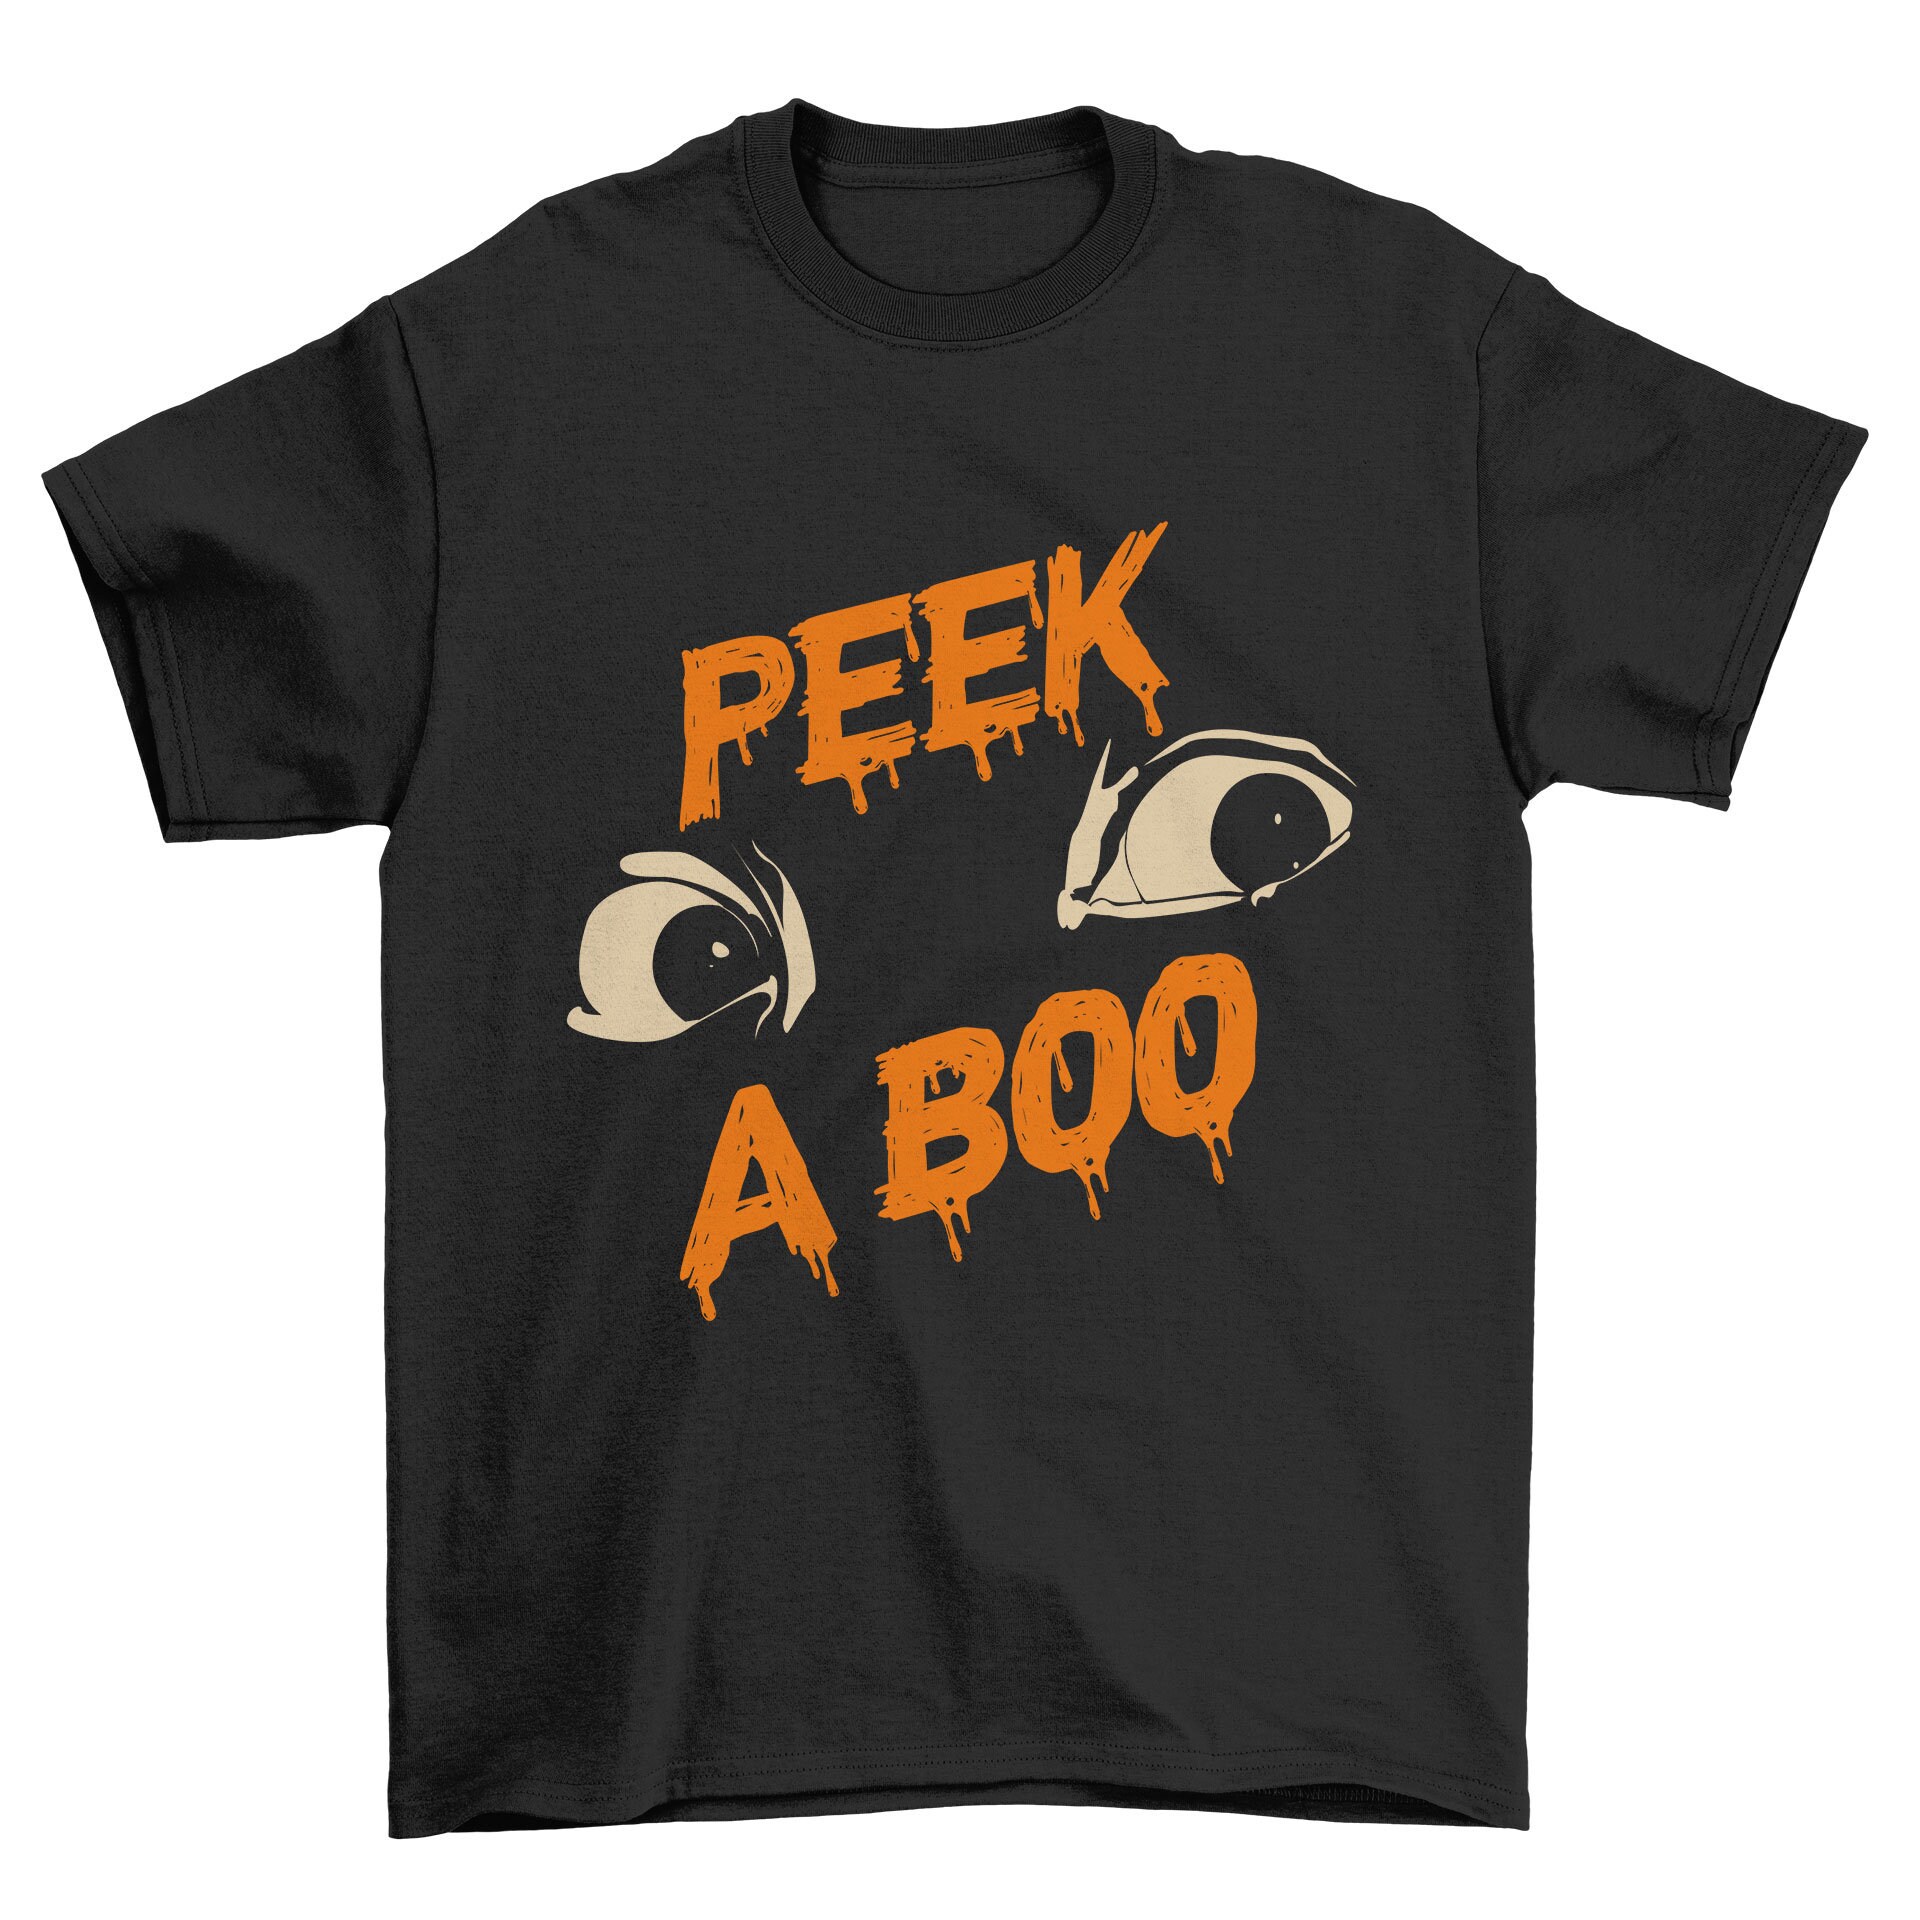 A Custom Horror Peek Boo Graphic Tee l Unisex Shirts l